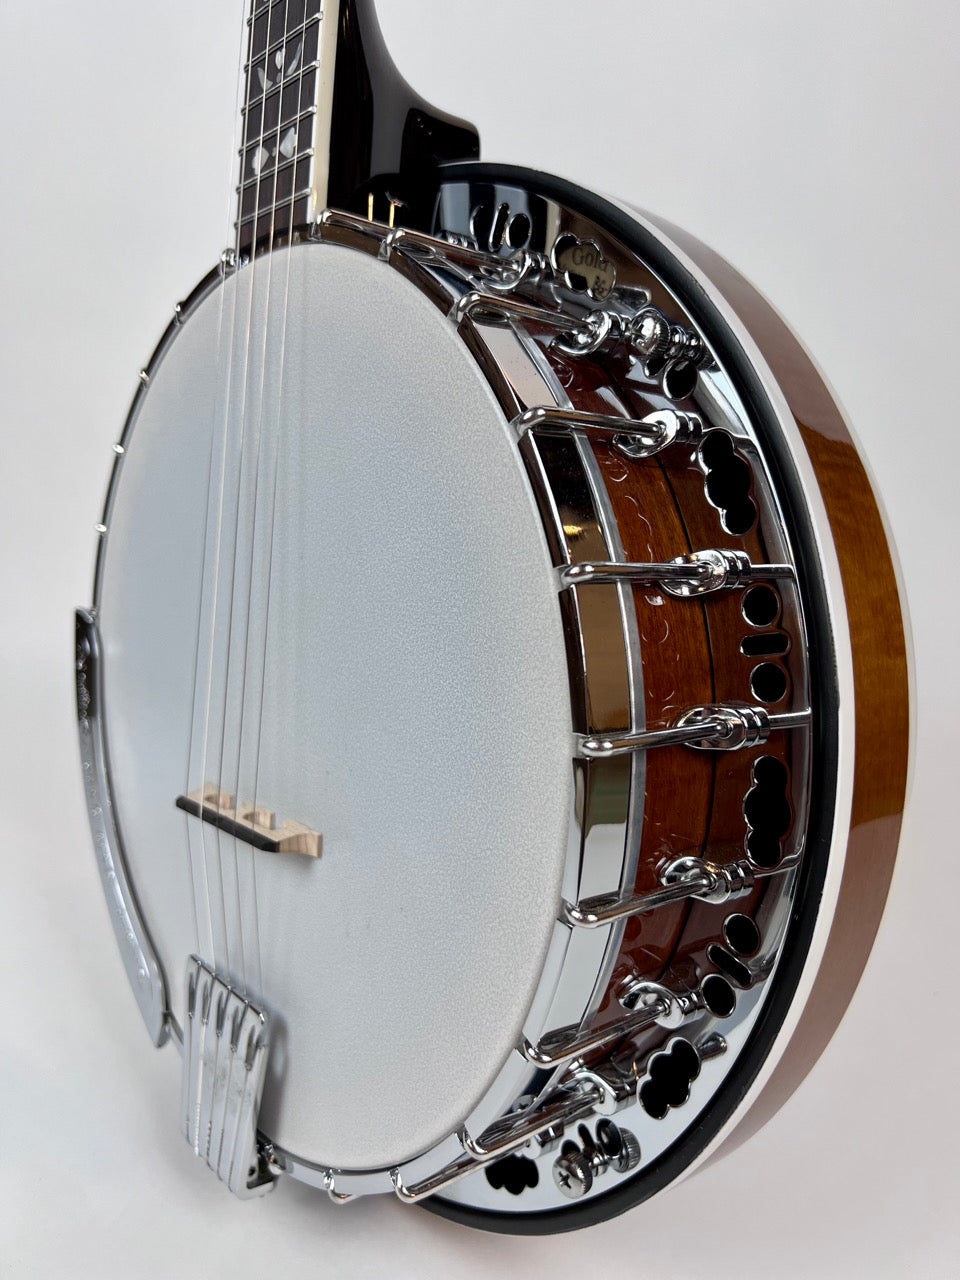 Gold Tone BG150F Resonator Banjo